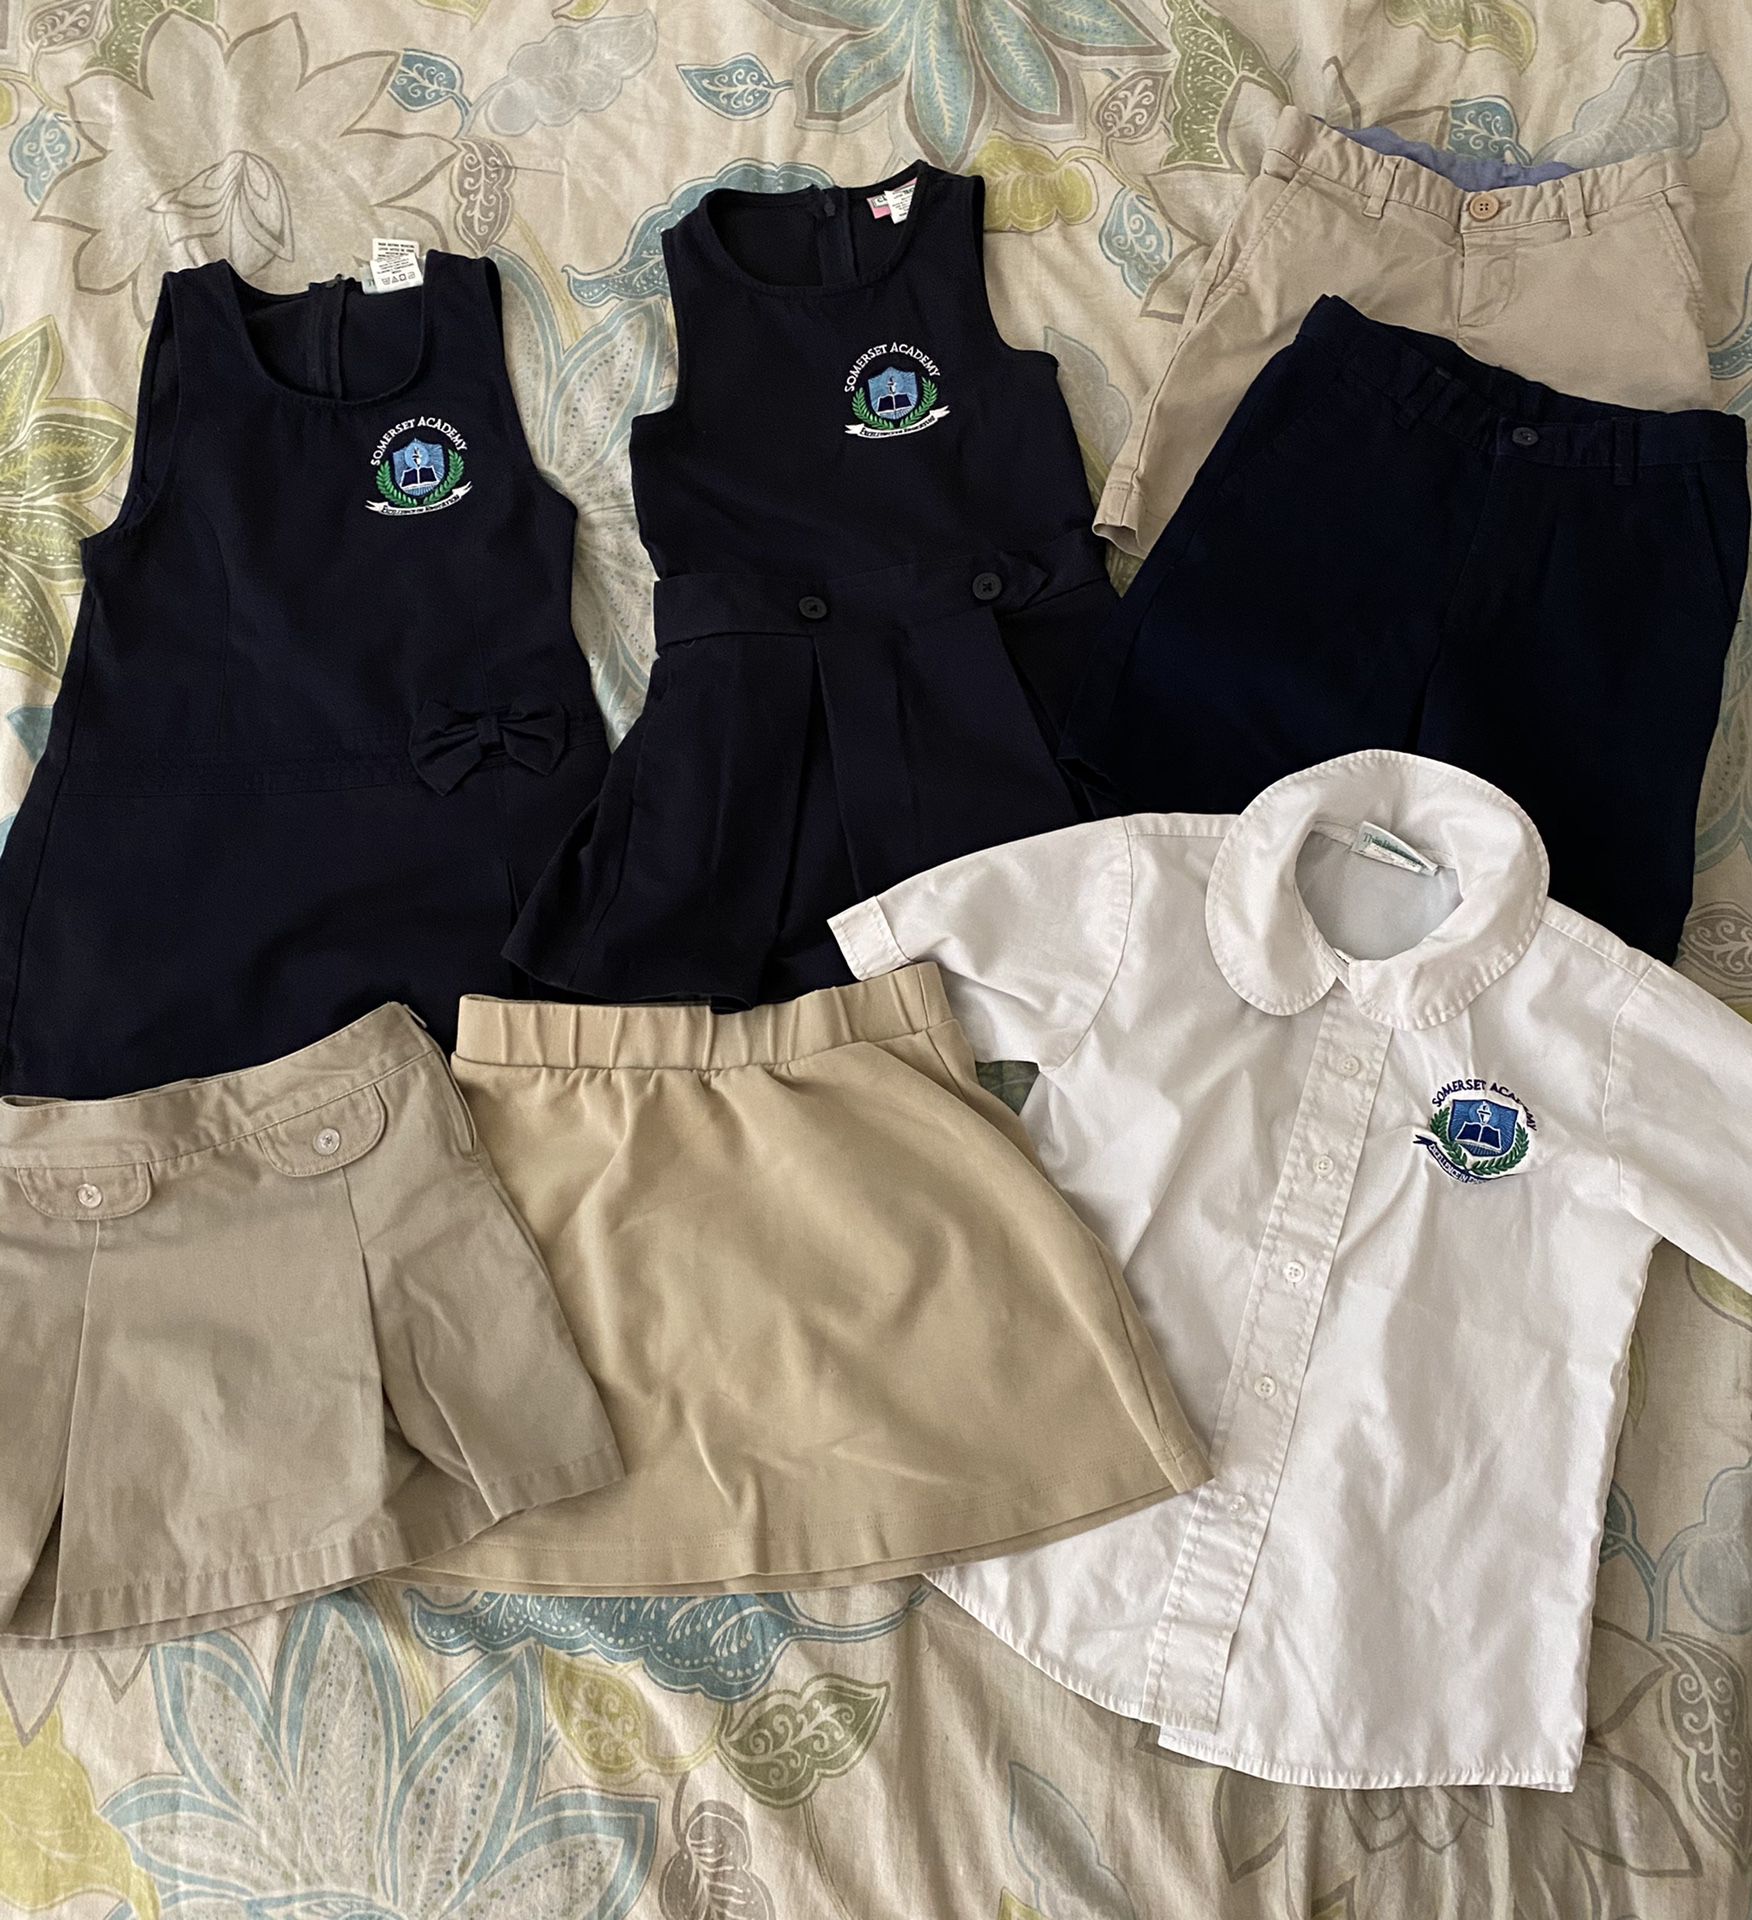 Somerset uniform size 6 items